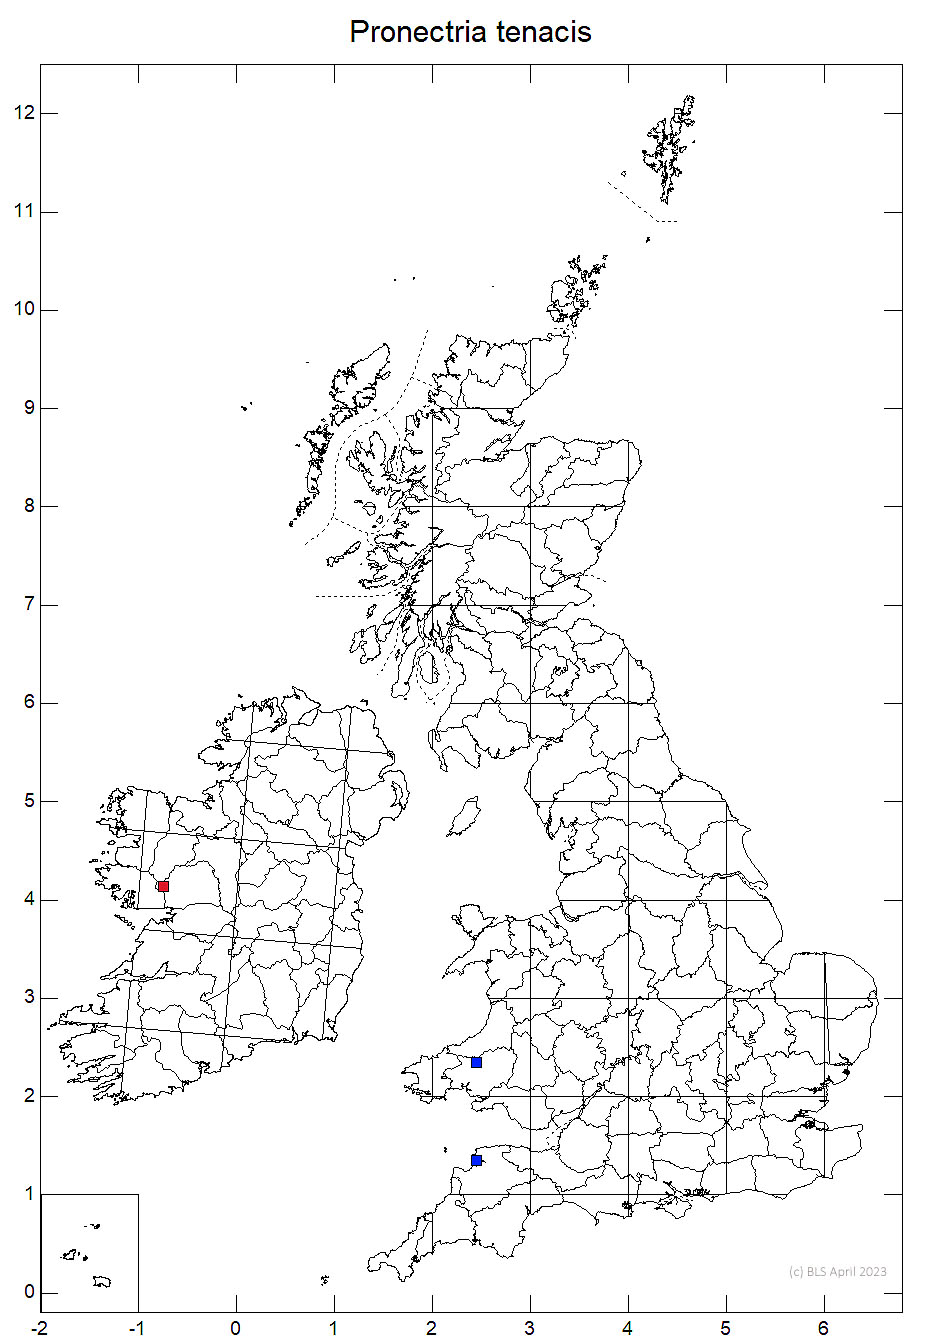 Pronectria tenacis 10km sq distribution map